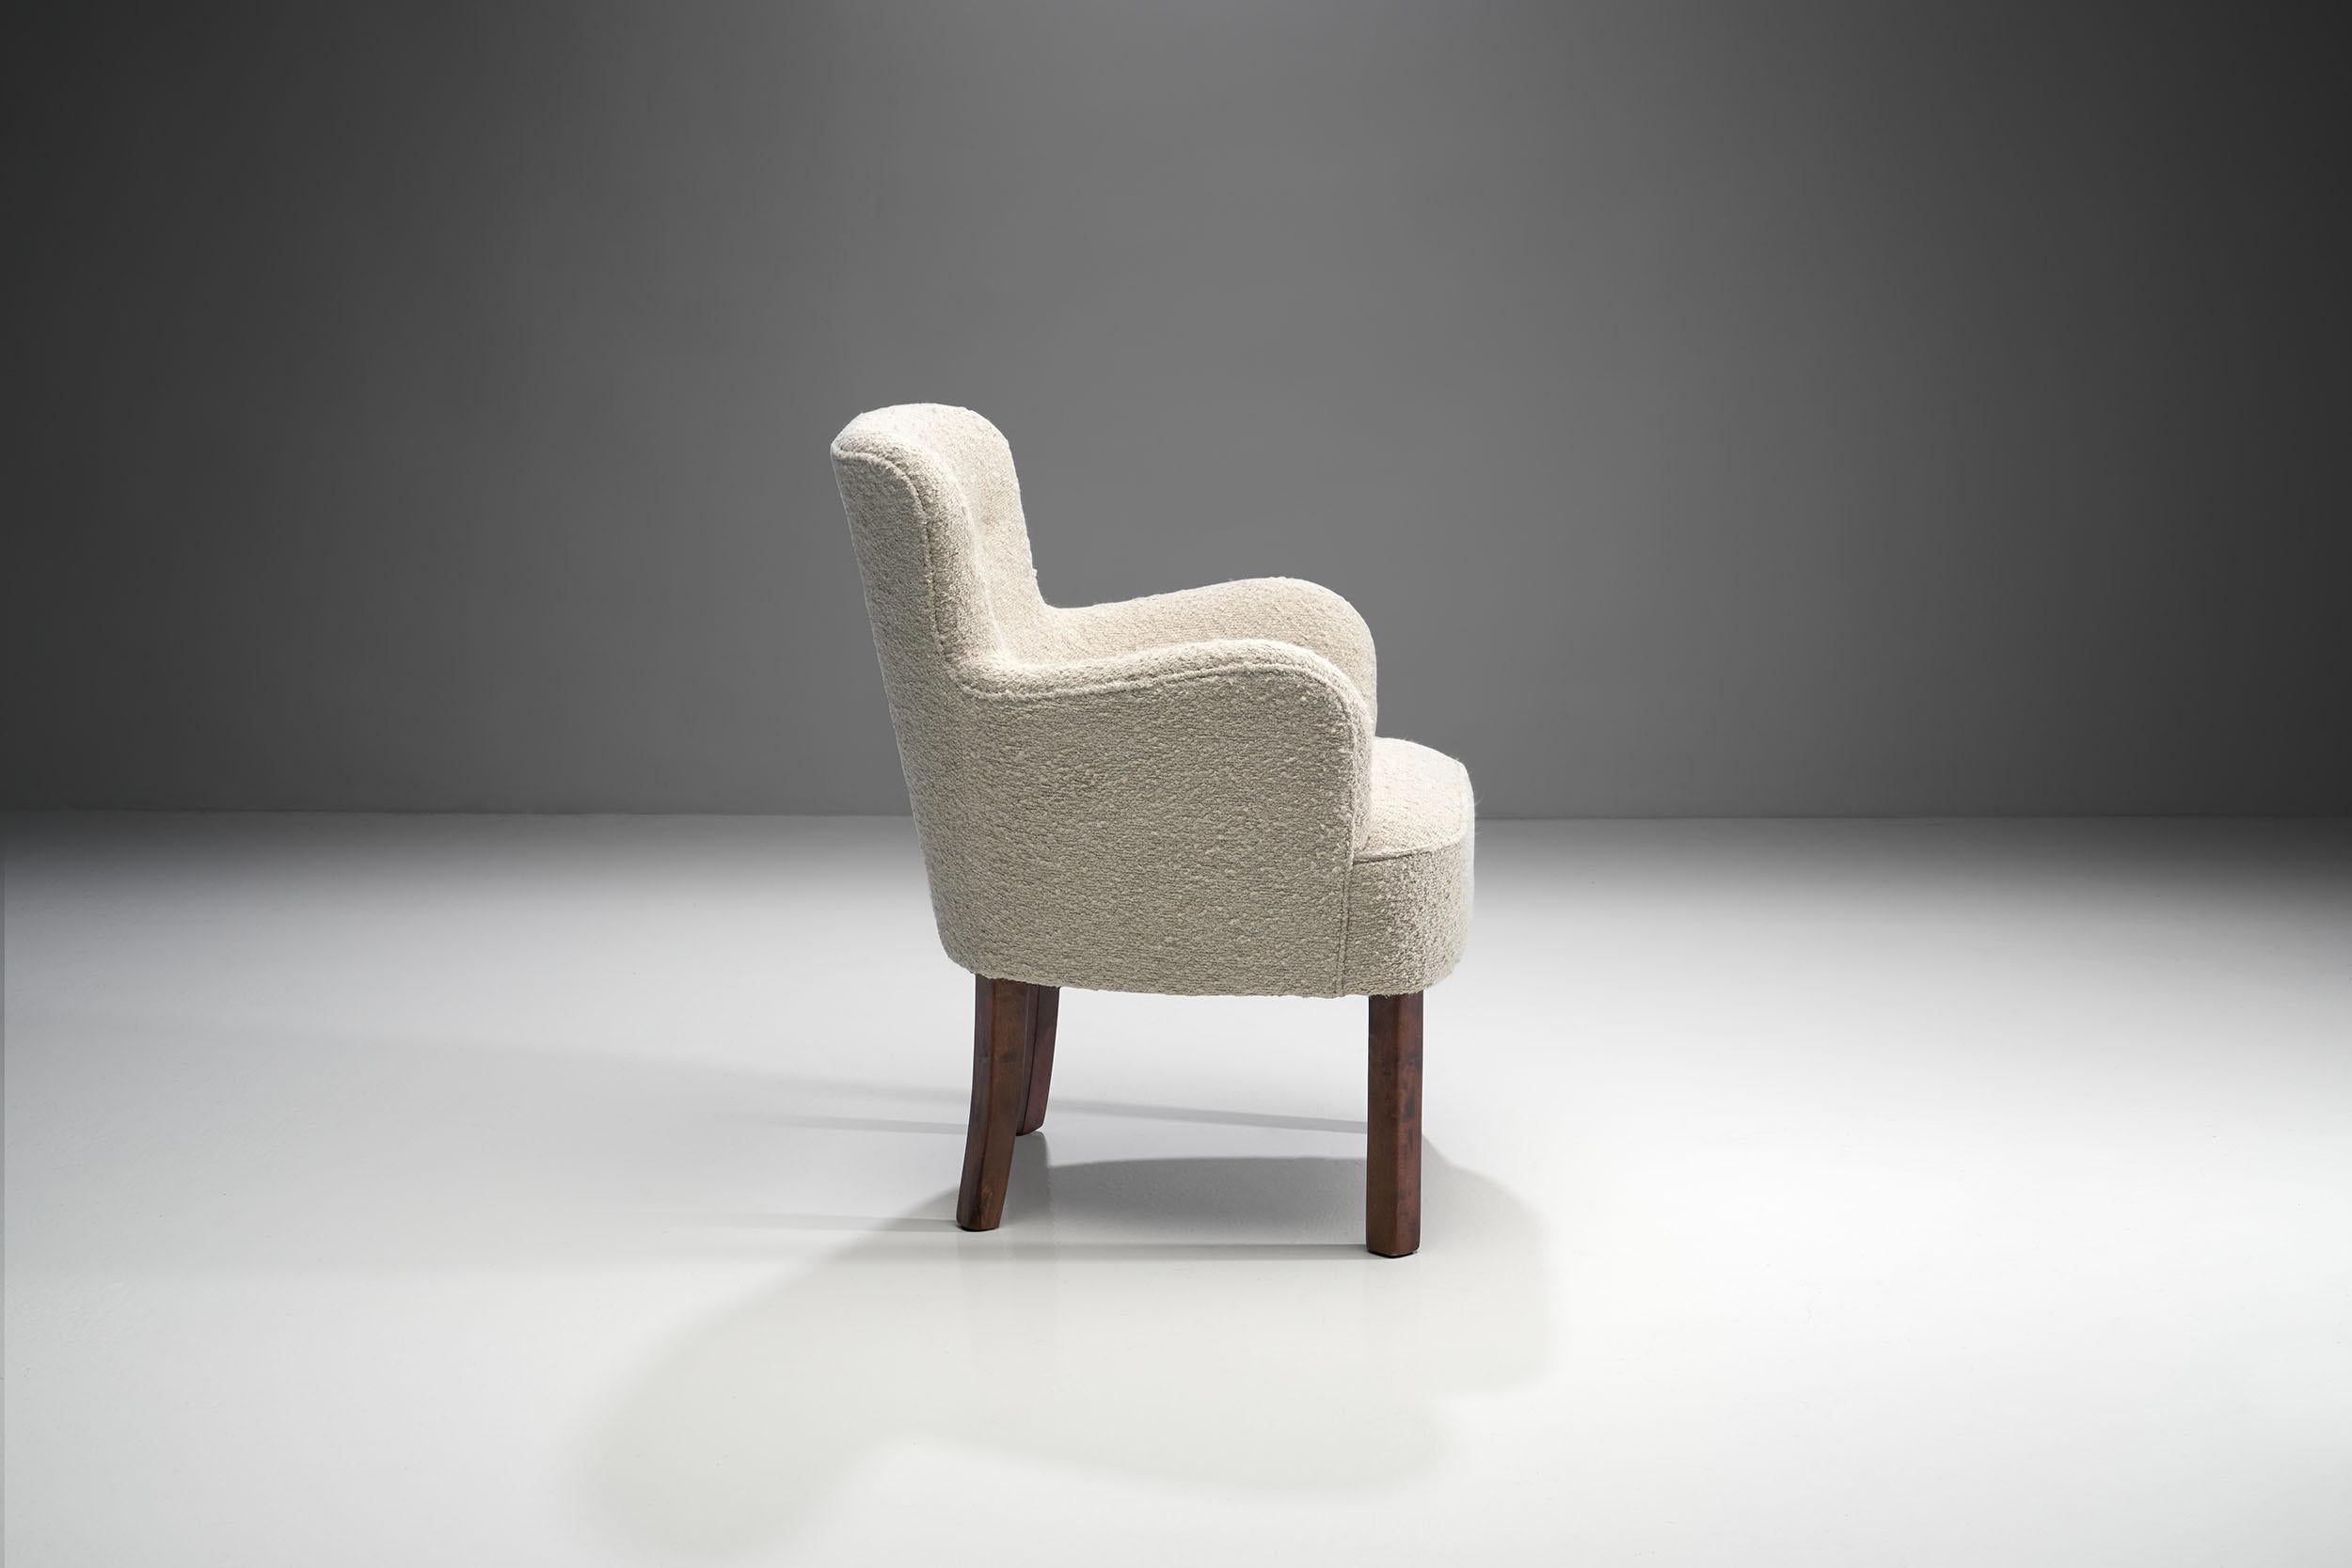 Mid-20th Century Danish Cabinetmaker Small Chair in Premium Bouclé Fabric, Denmark, 1940s